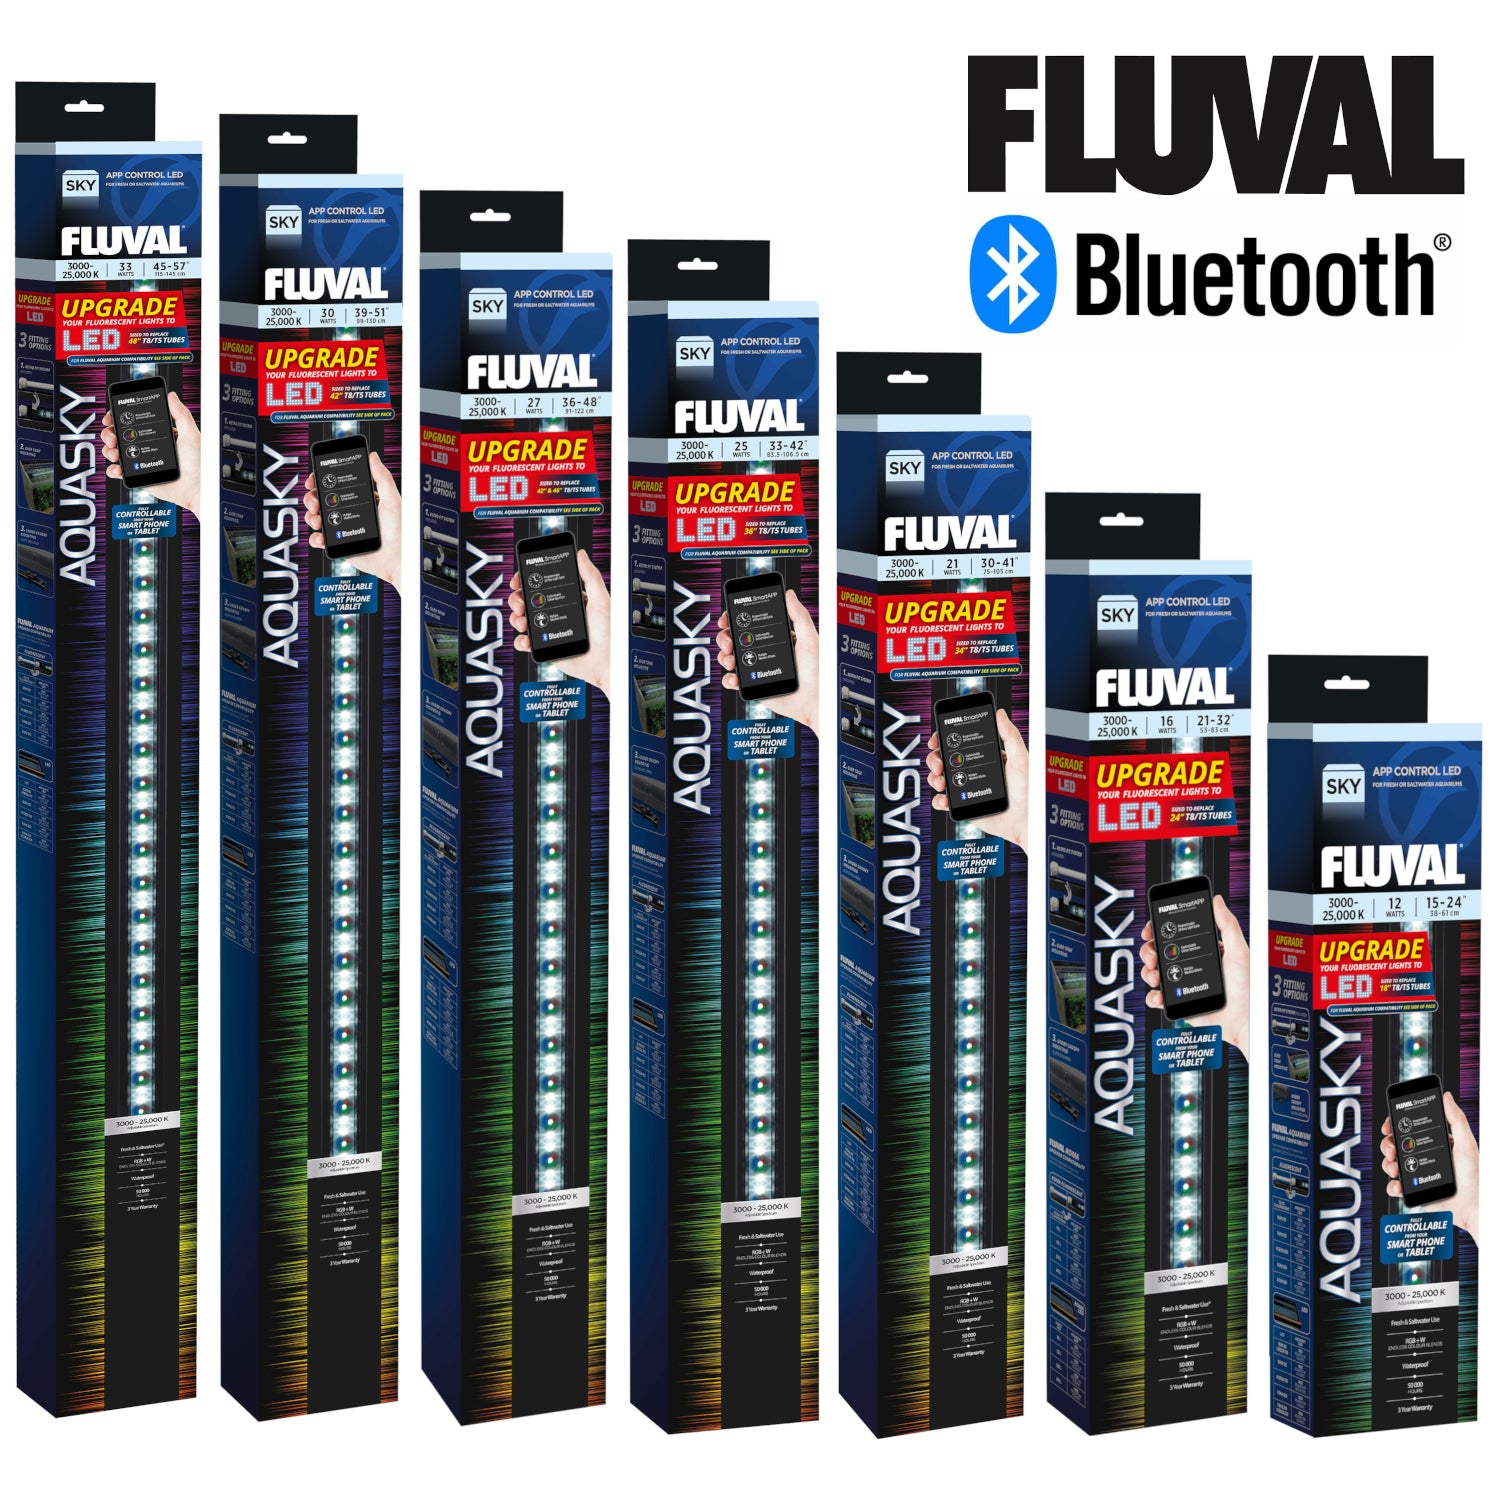 Fluval AquaSky 2.0 Bluetooth LED Aquarium Lighting 7 Sizes